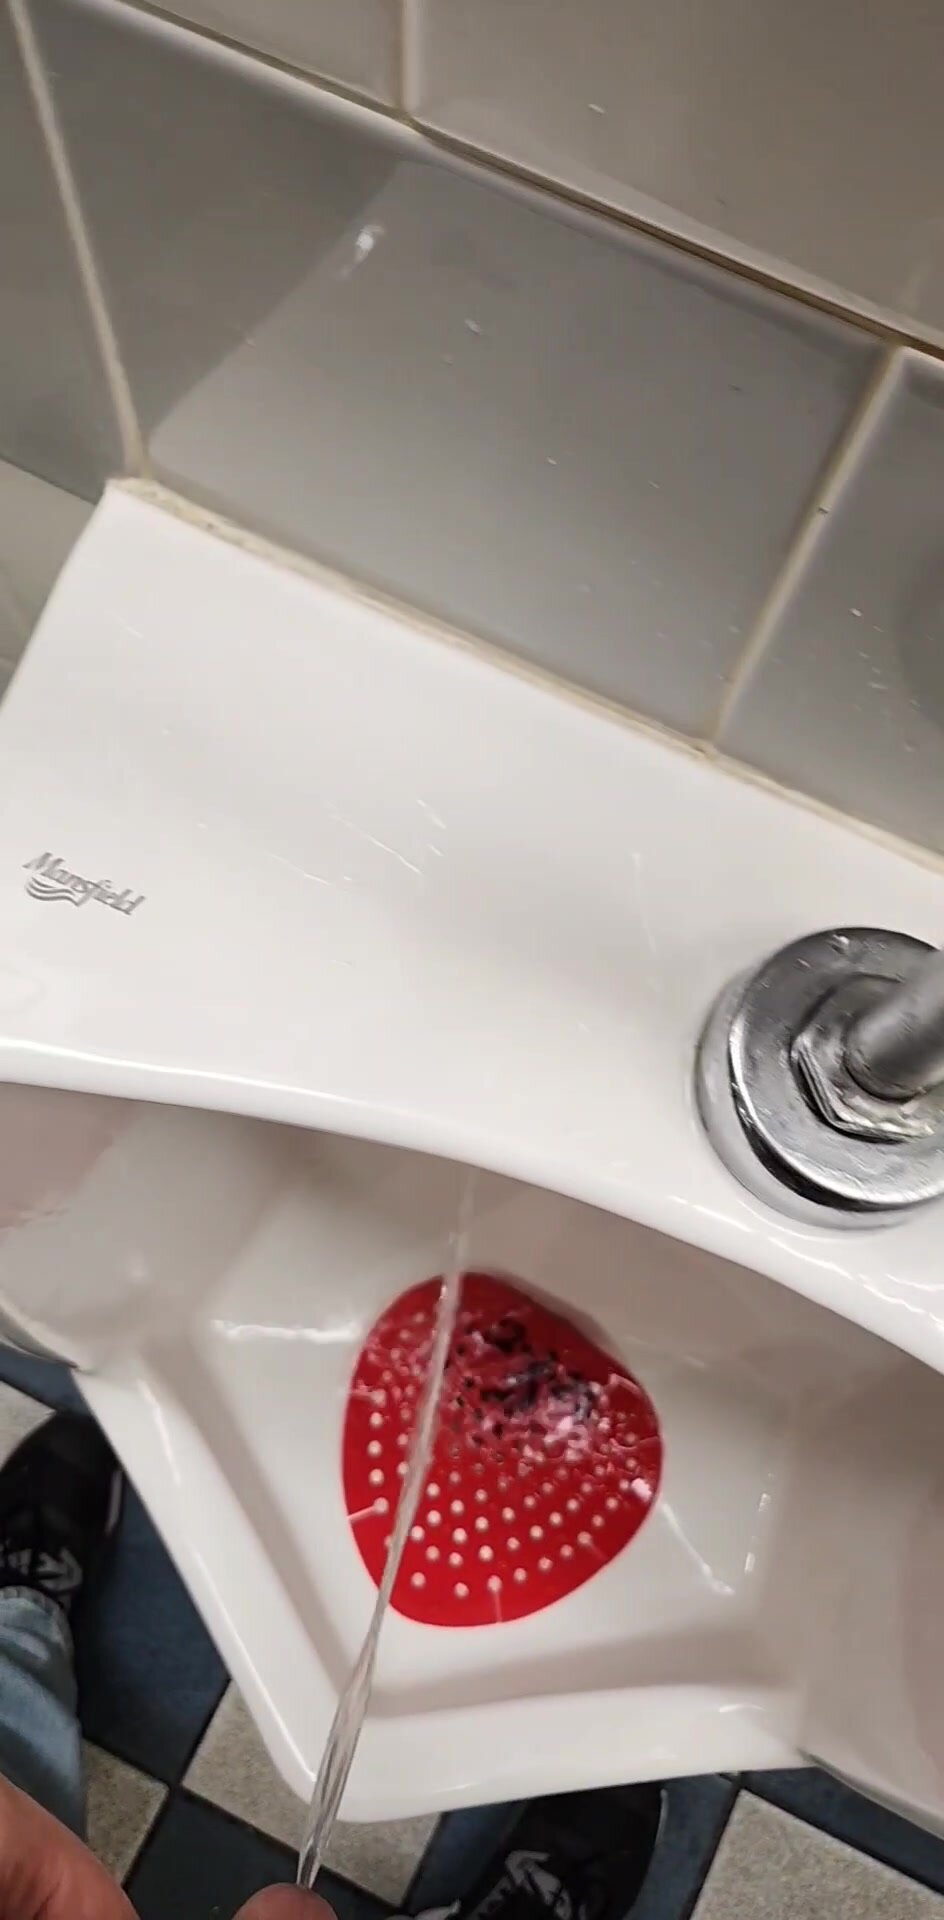 Pissing across urinals